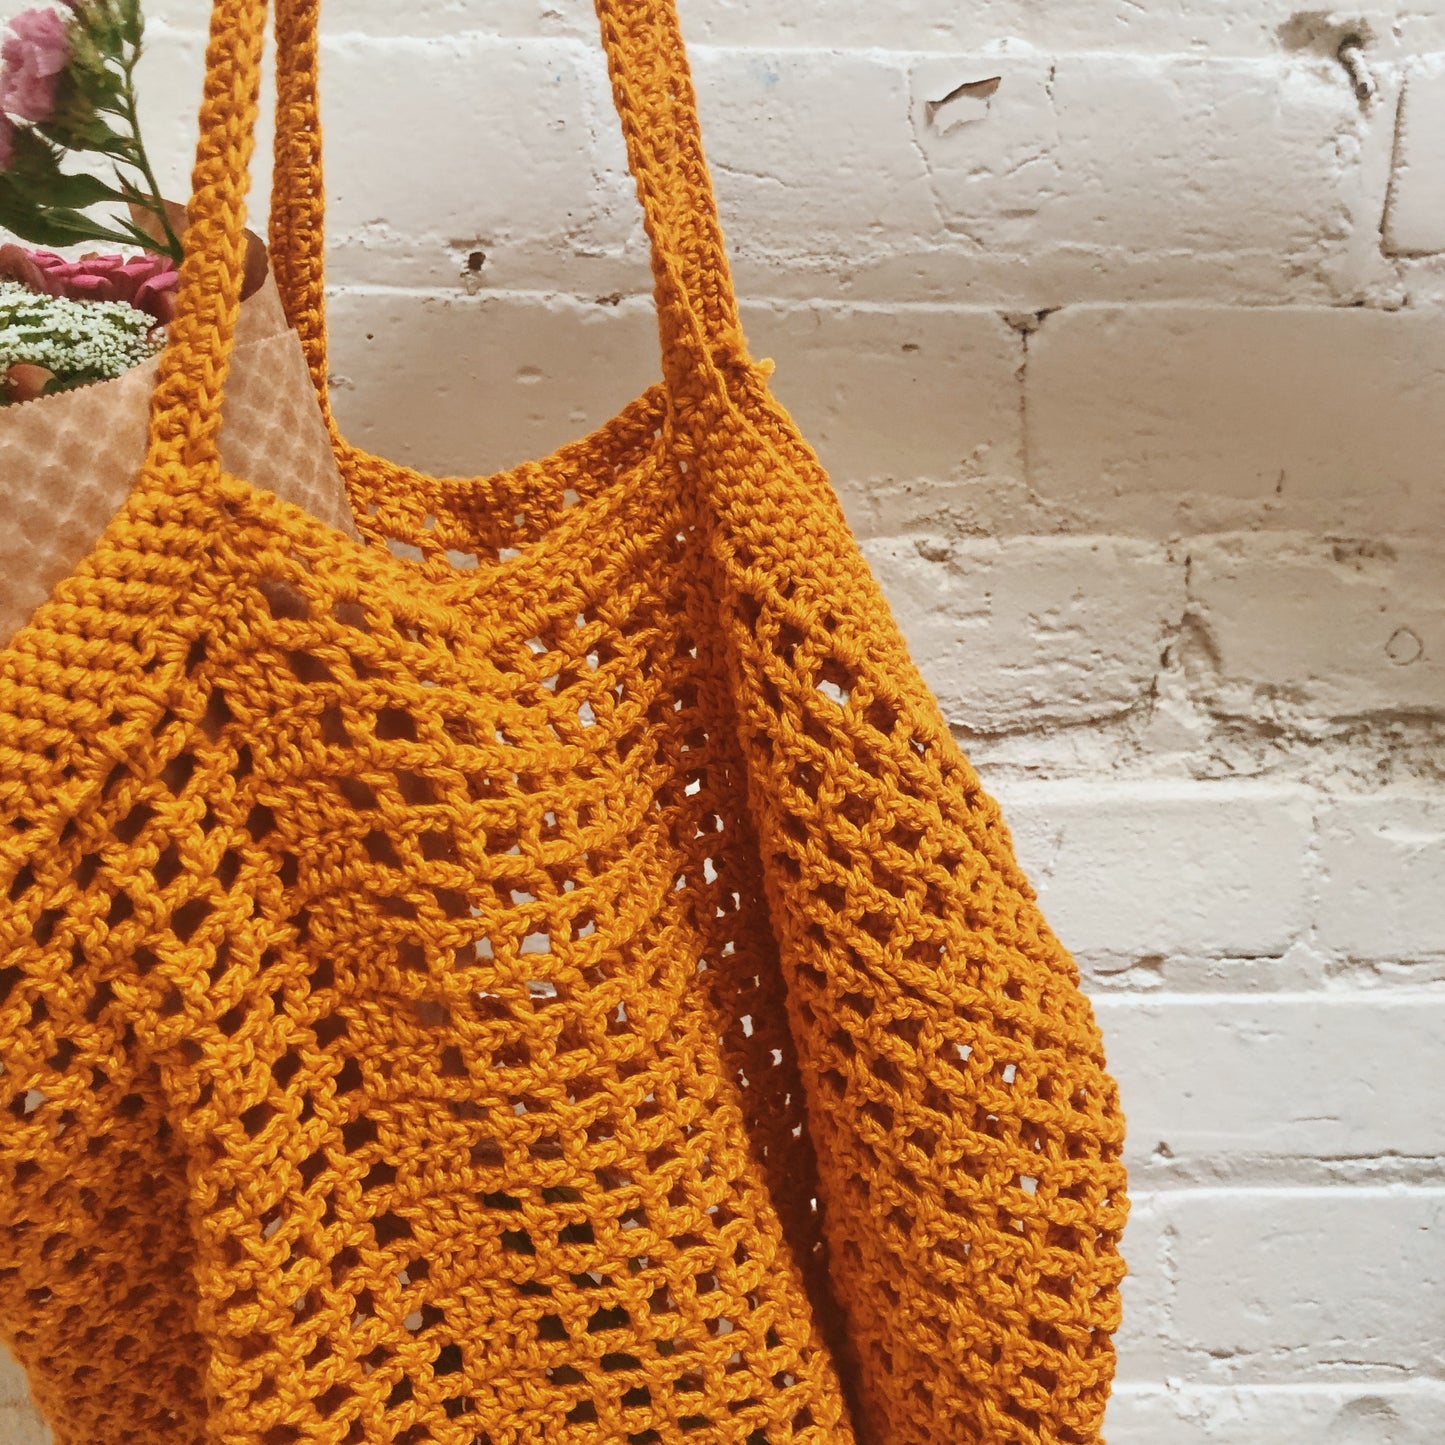 Hand Crochet Market Bag